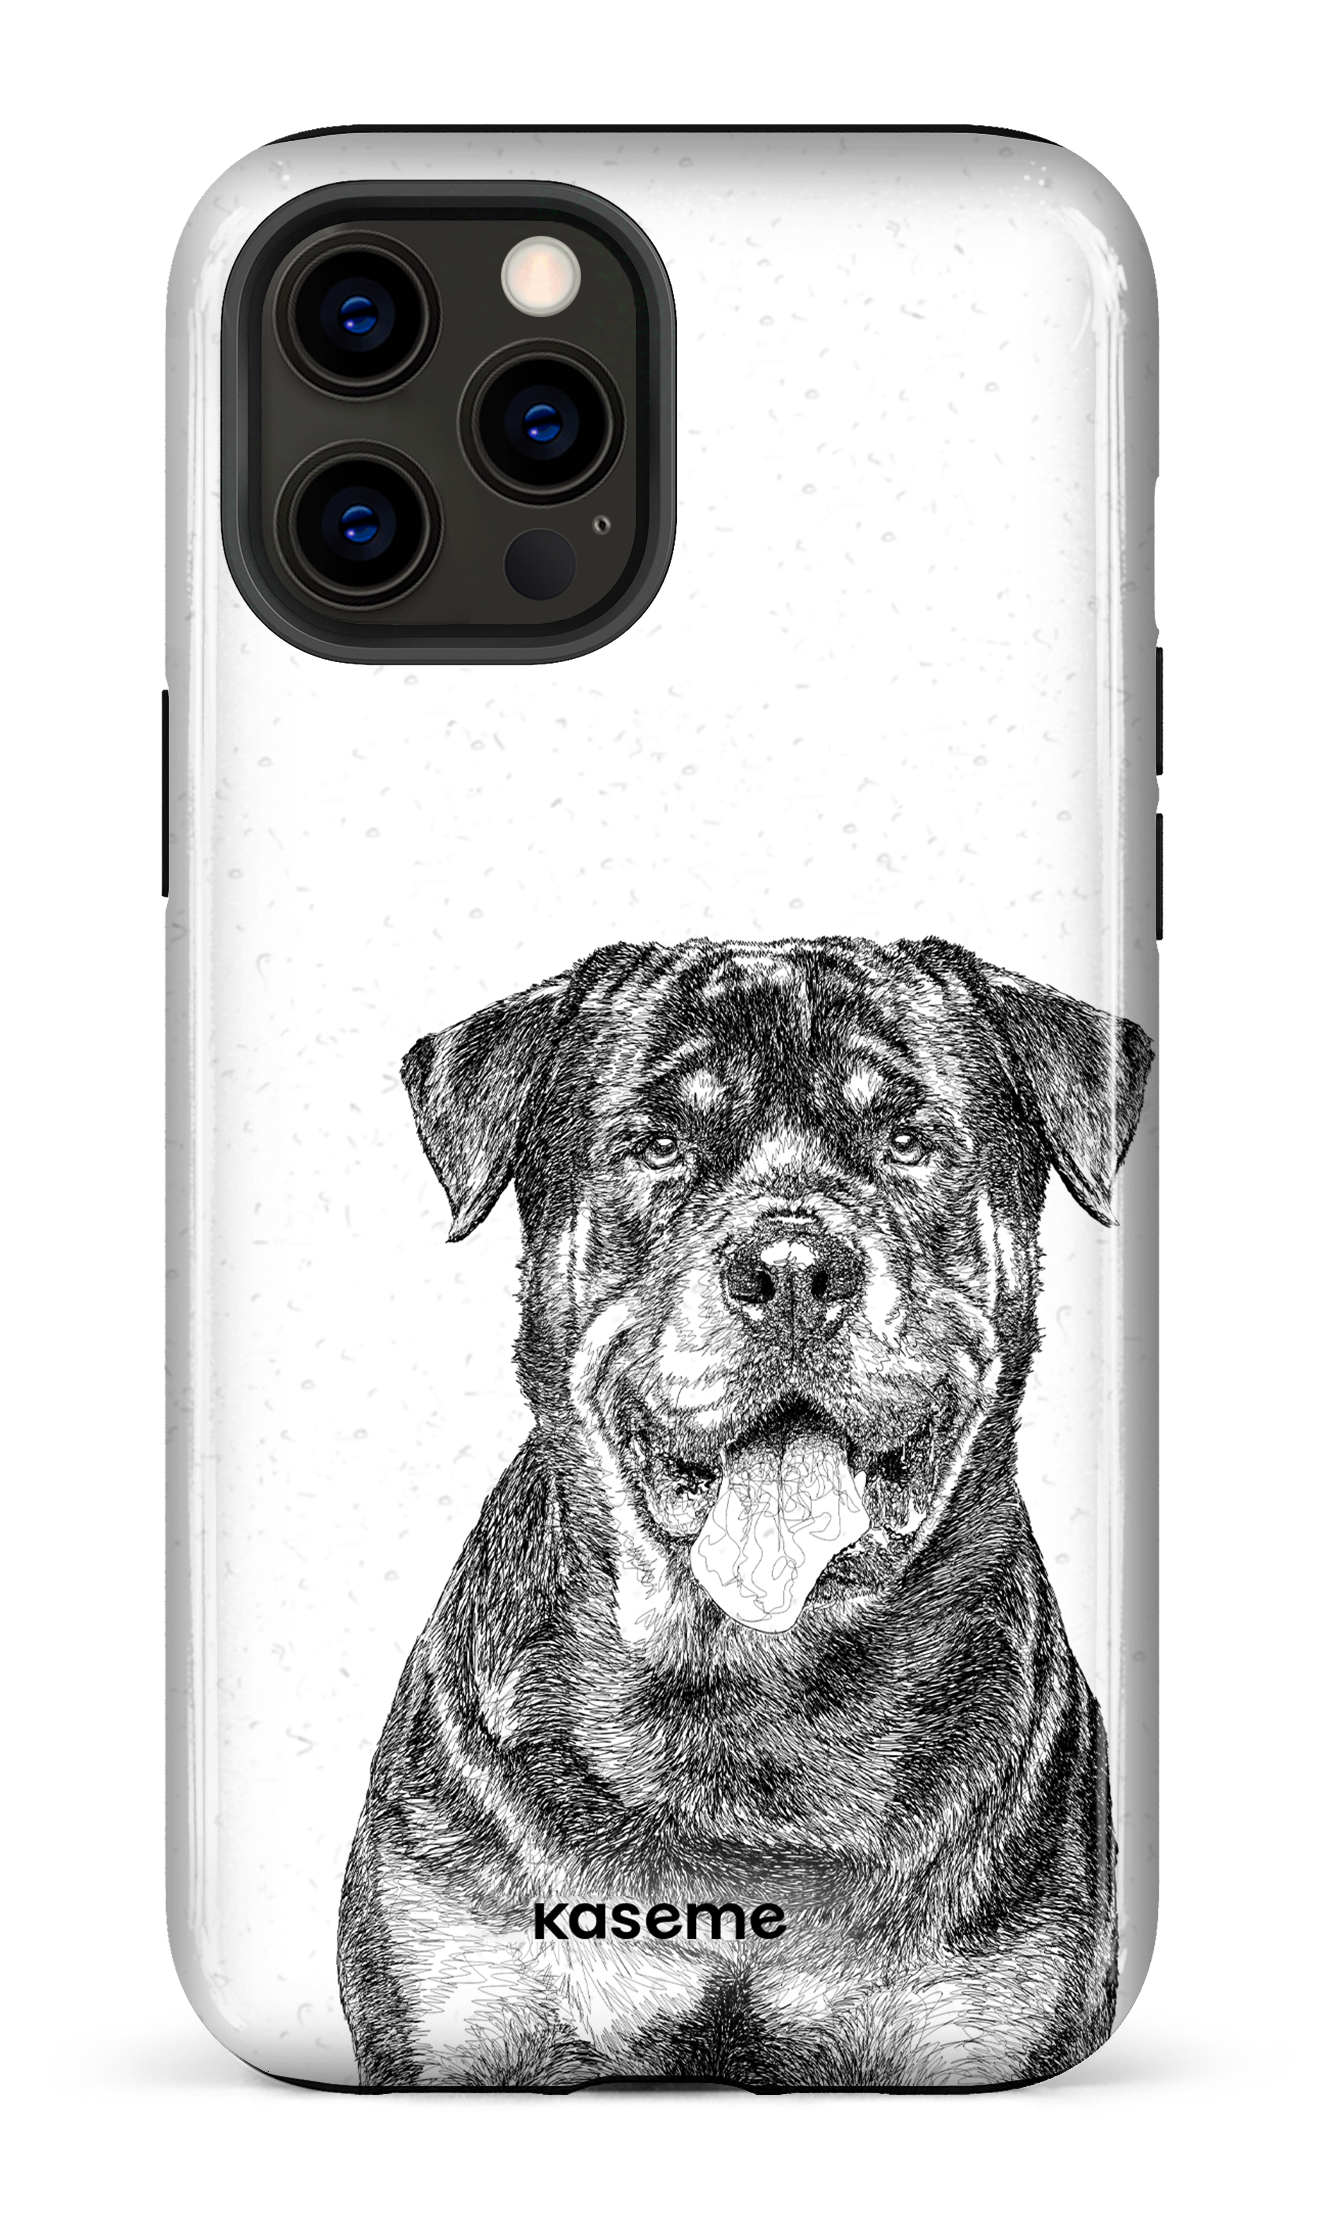 Rottweiler - iPhone 12 Pro Max